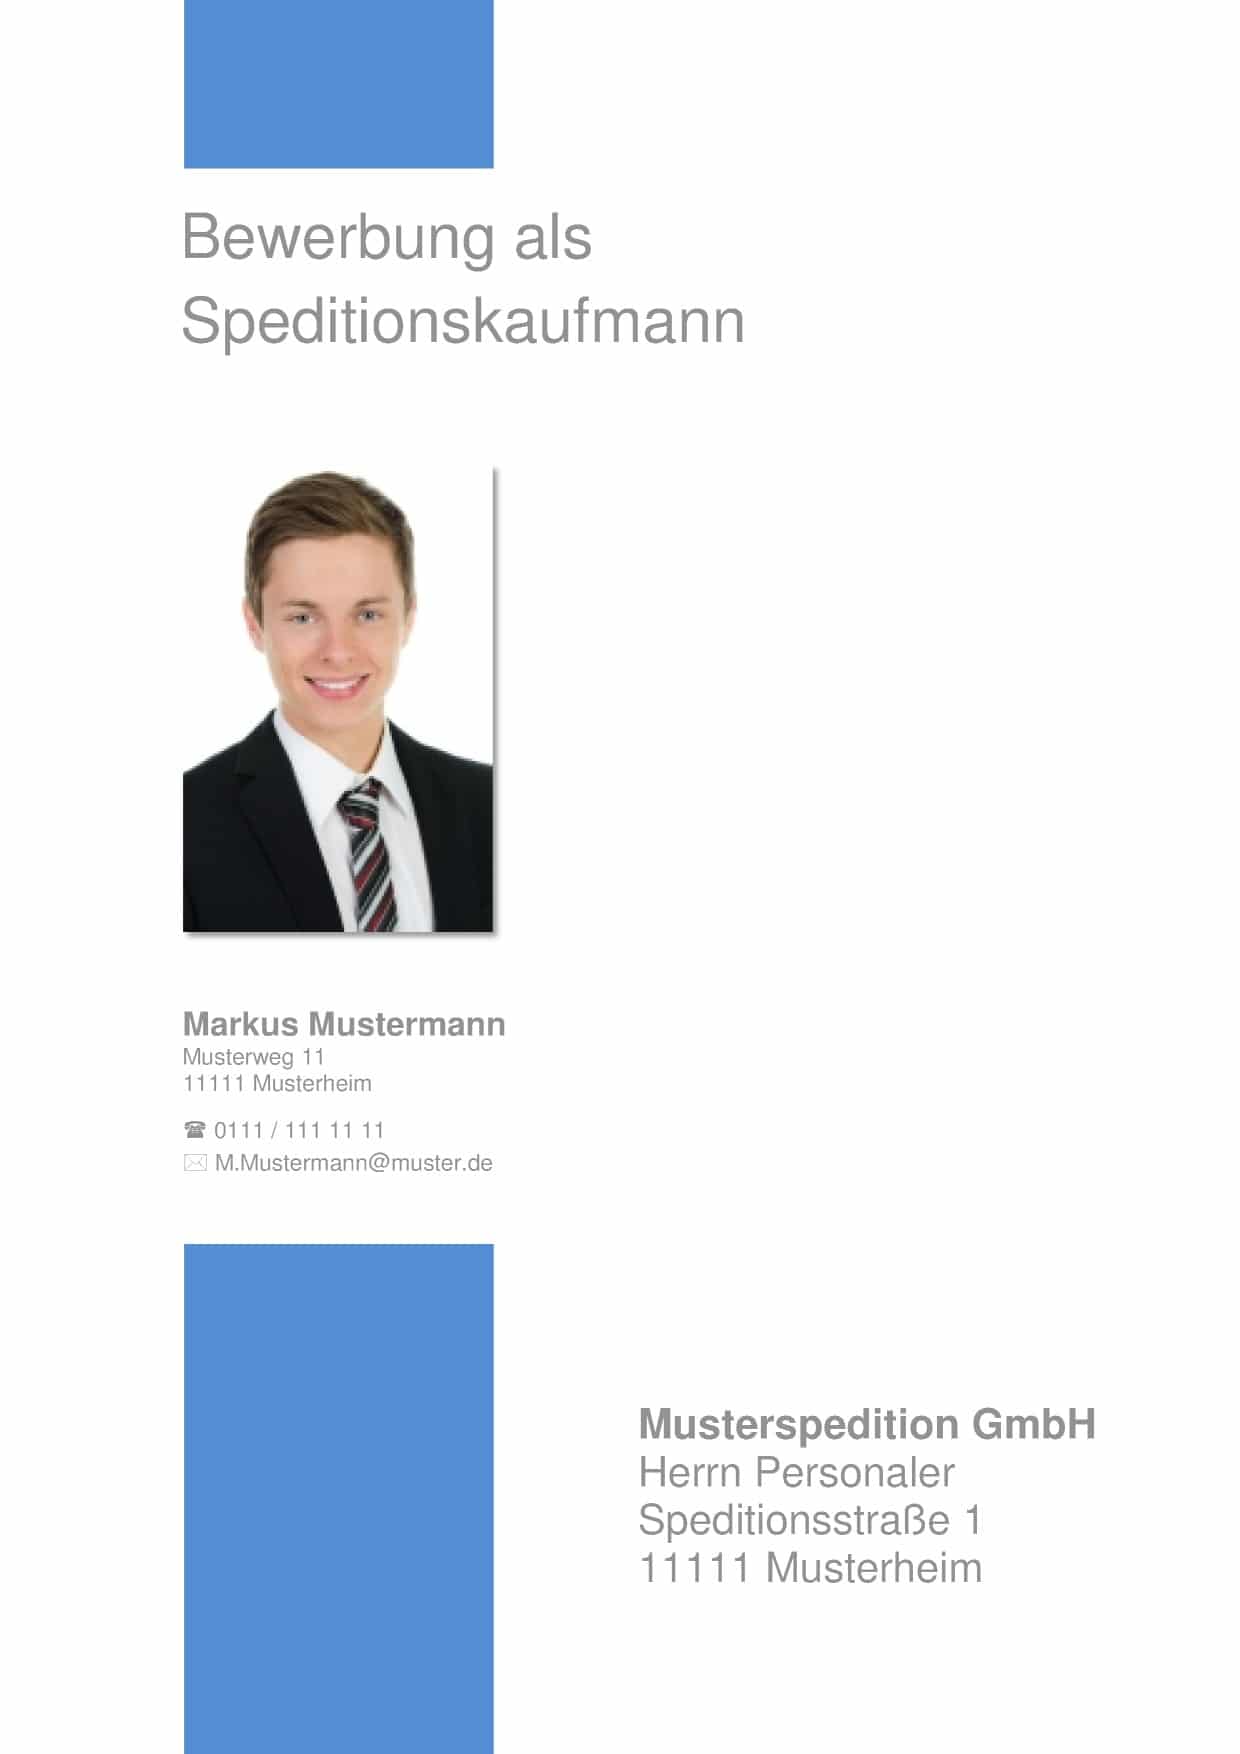 Deckblatt Bewerbung 17 - Kaufmann / Kauffrau oder Speditionskaufmann bzw. Bürokaufmann und Bürokauffrau